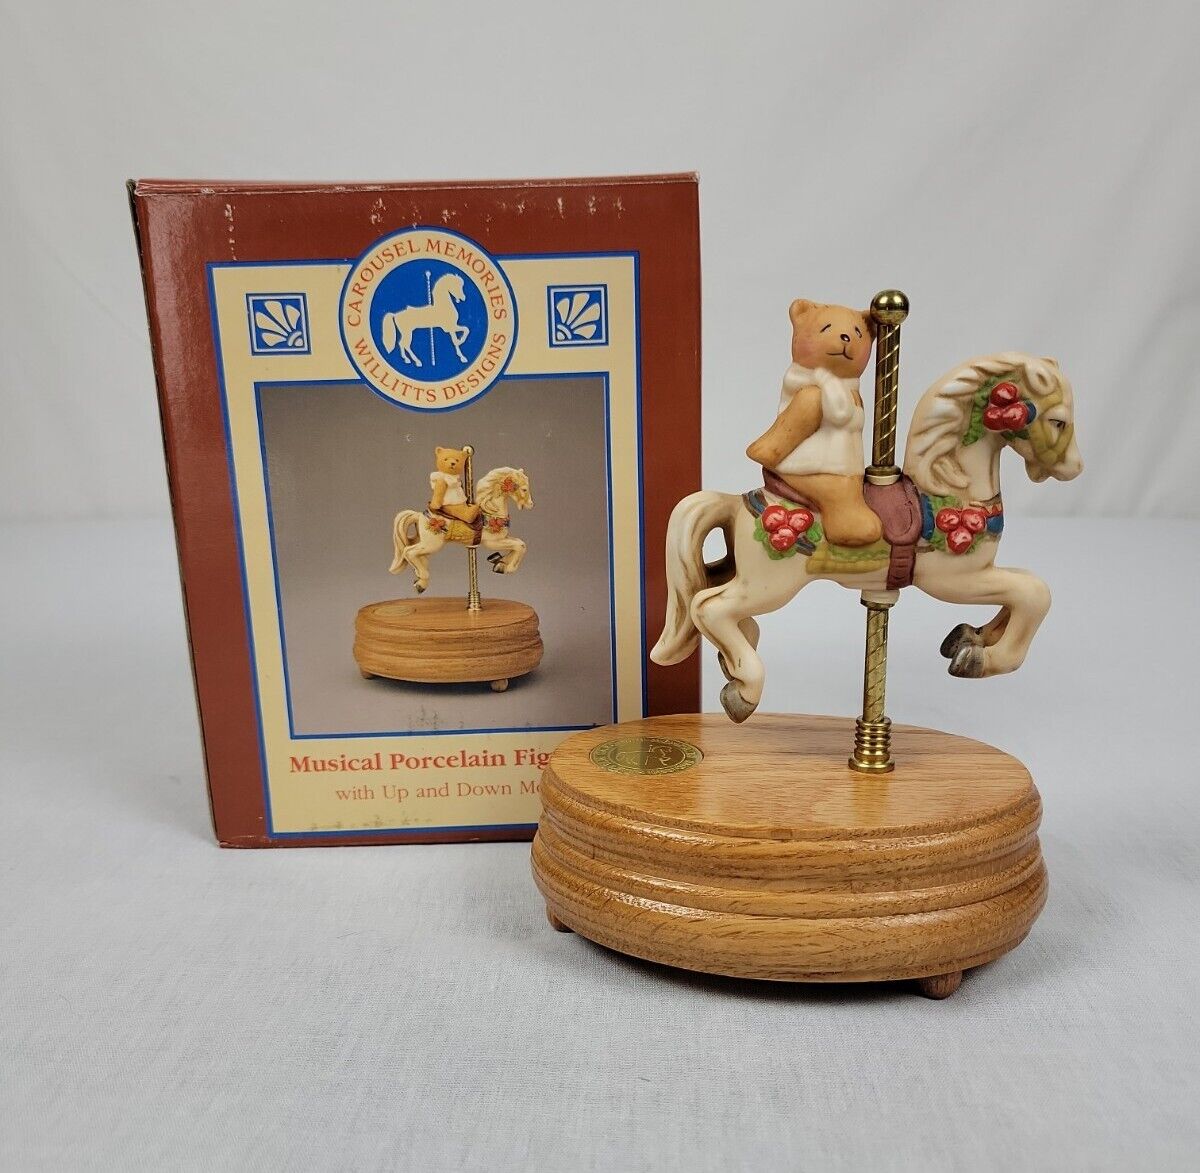 Willitts Designs Horse Carousel Musical Porcelain Figurine Teddy Bear #05001